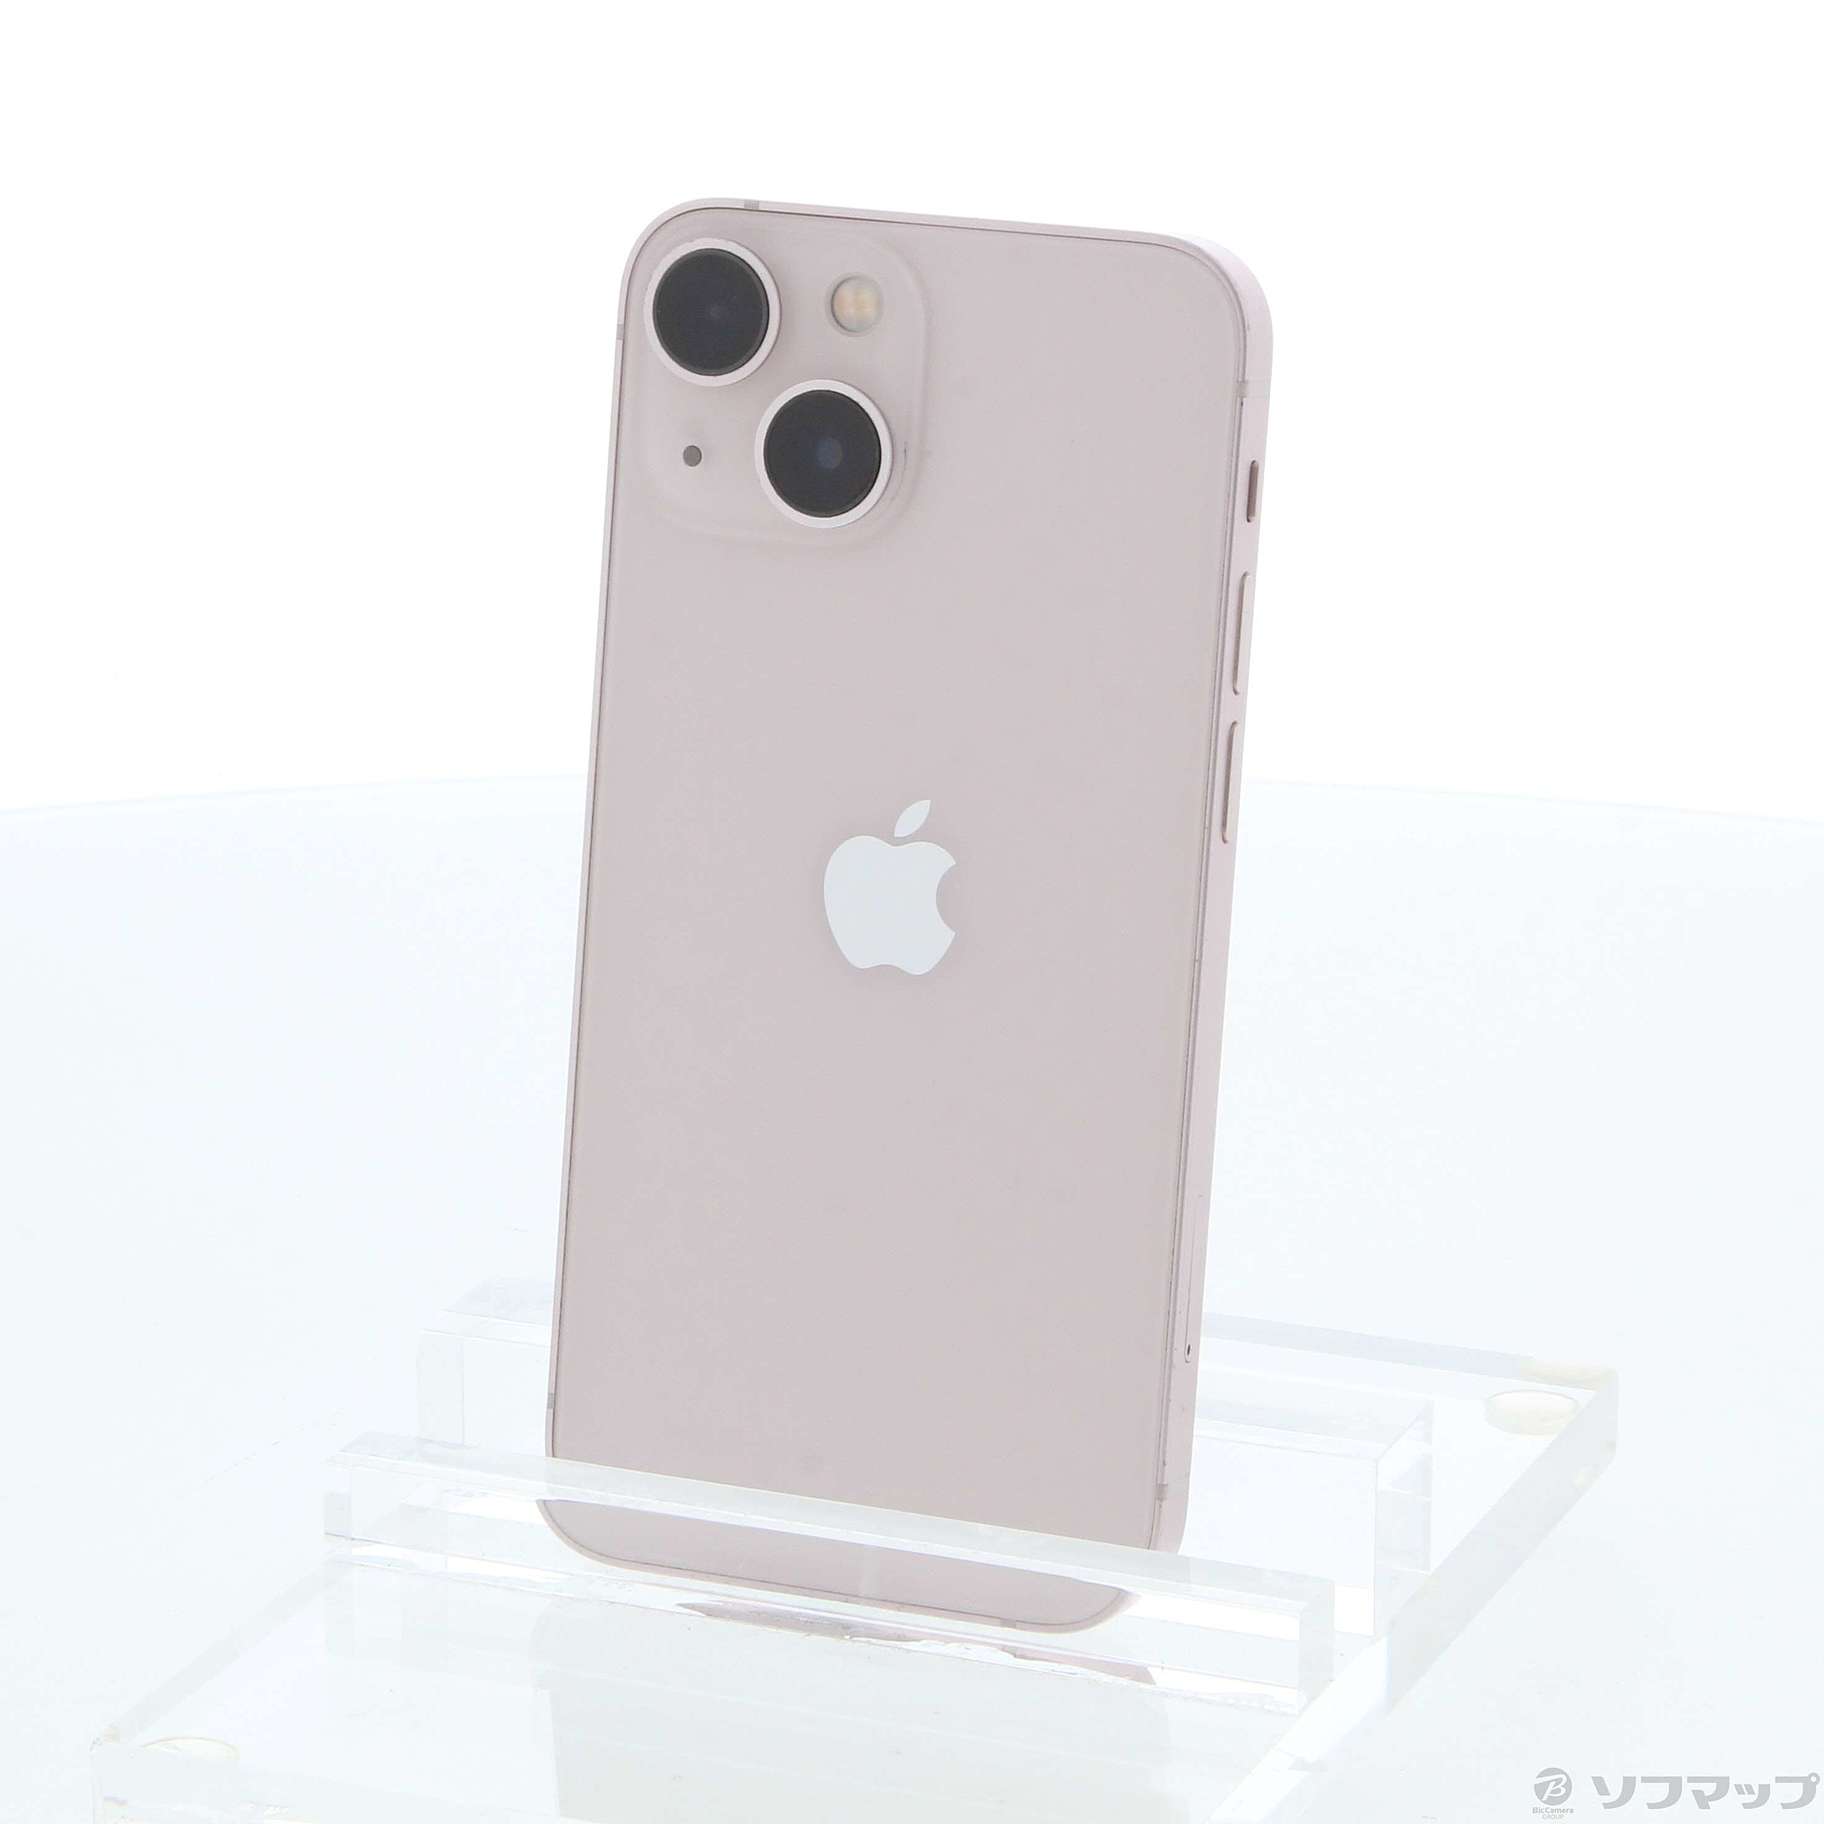 iPhone13 mini 128GB ピンク SIMフリー